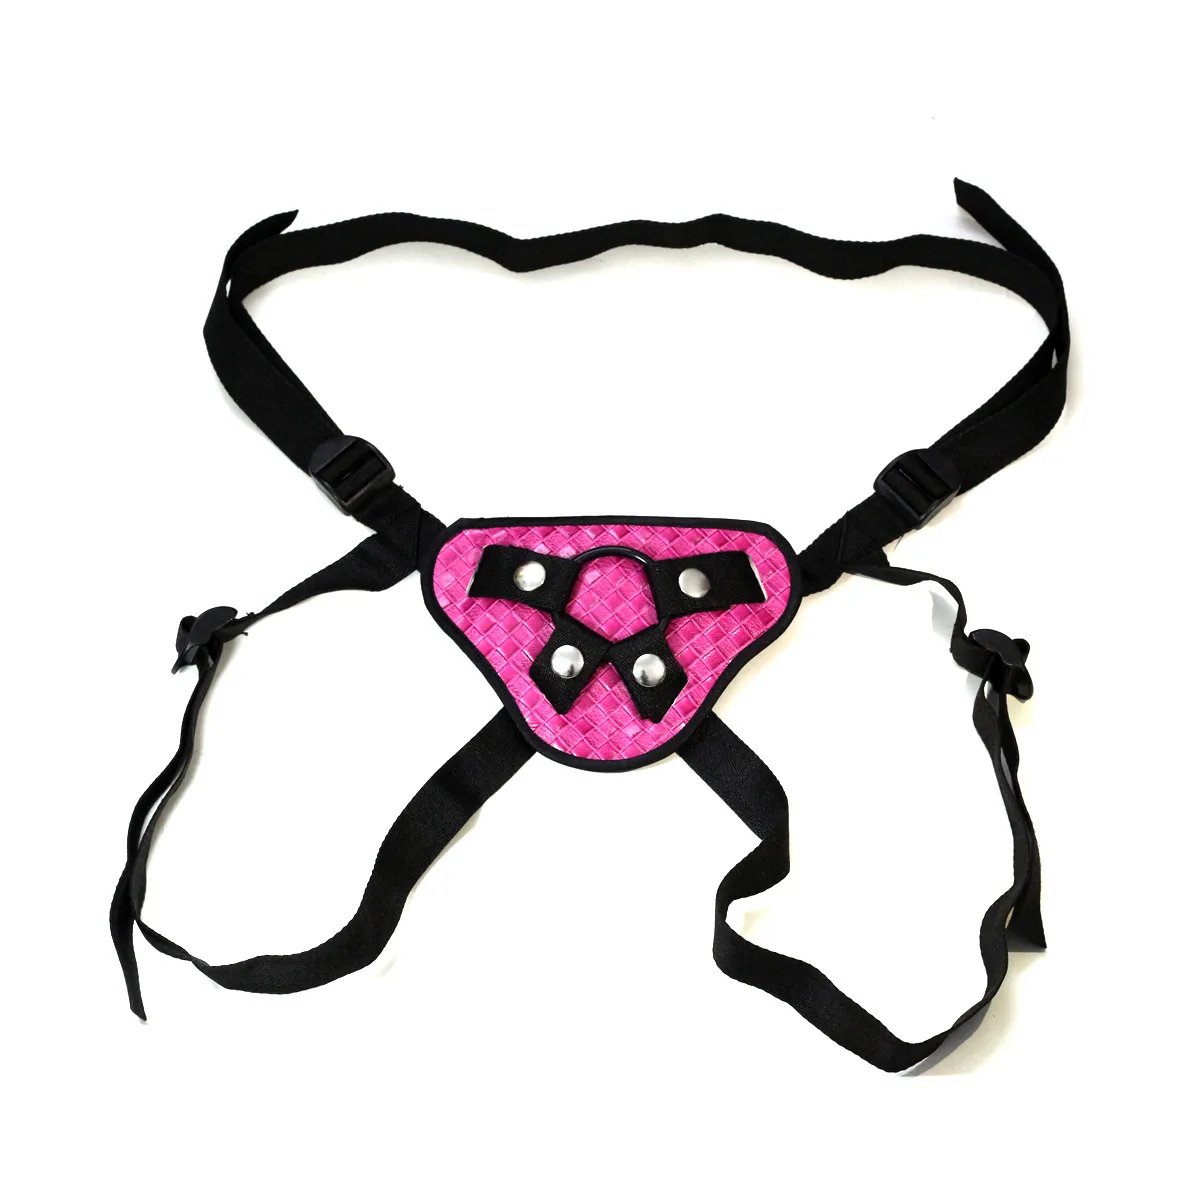 New pimk pu bondage straps harness bondage strap on strap underwear for lesbian fetish sex toys7318295